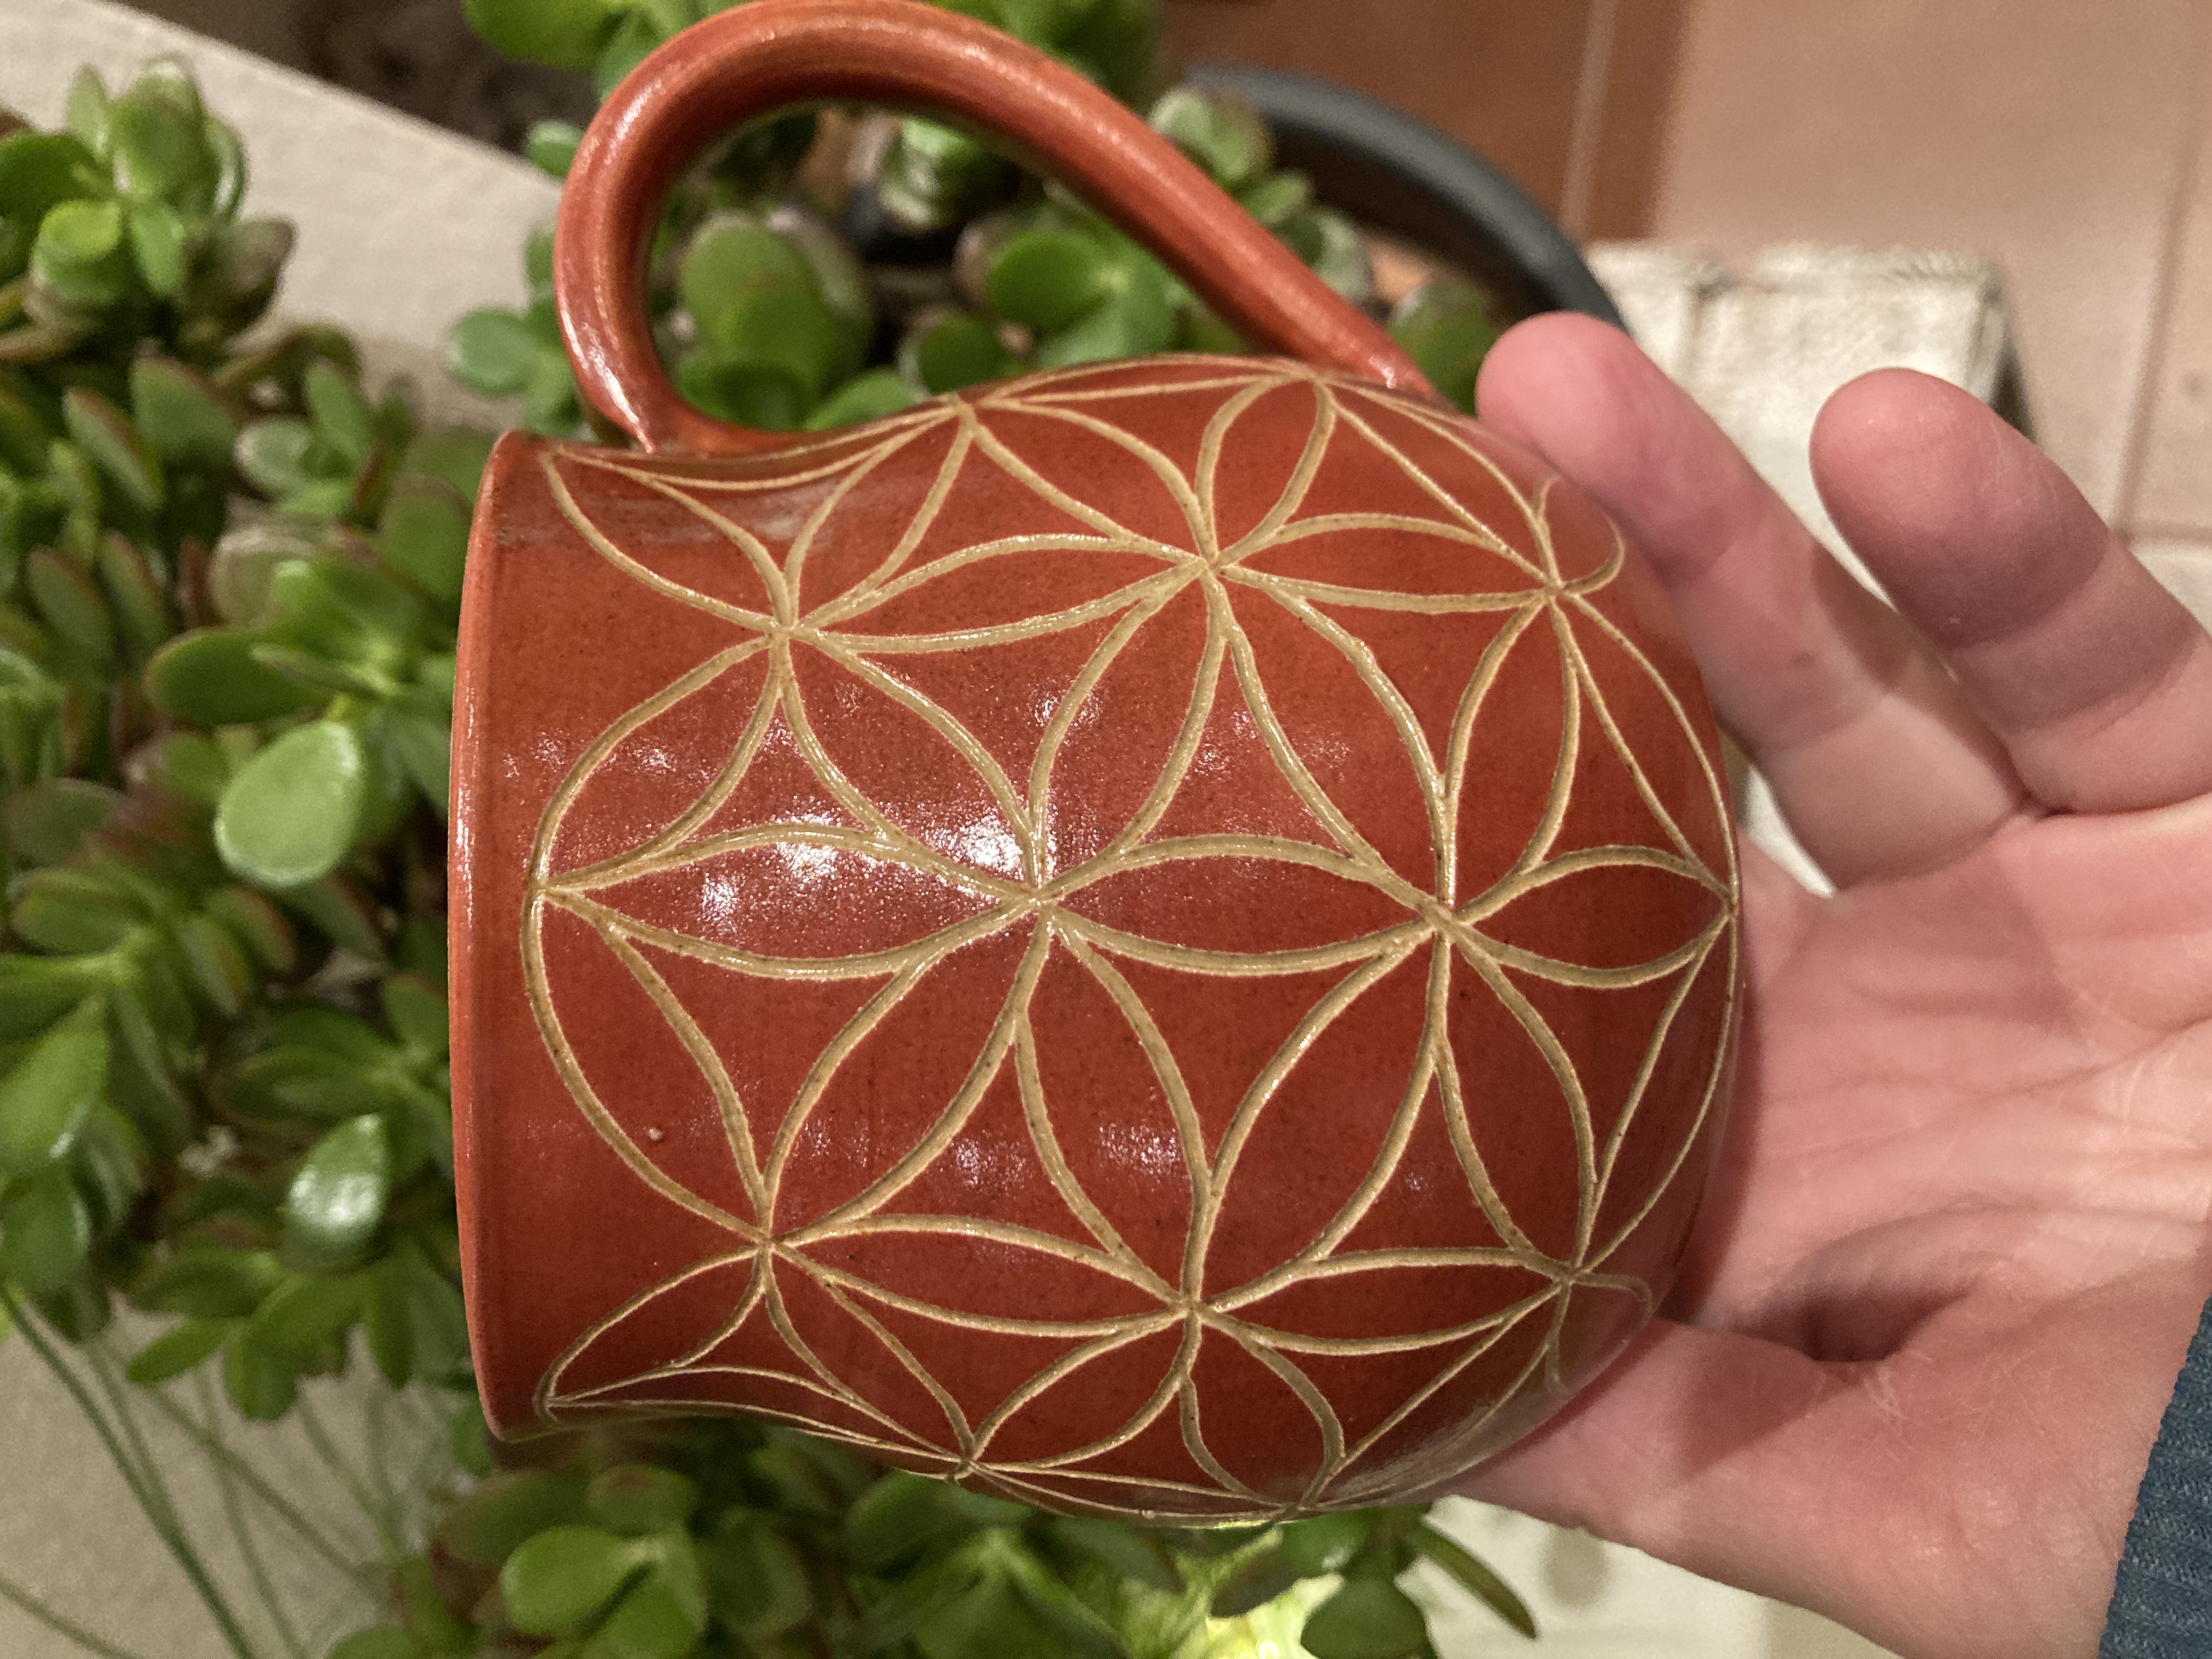 Tasse Blume des Lebens aus Agnihotra-Keramik